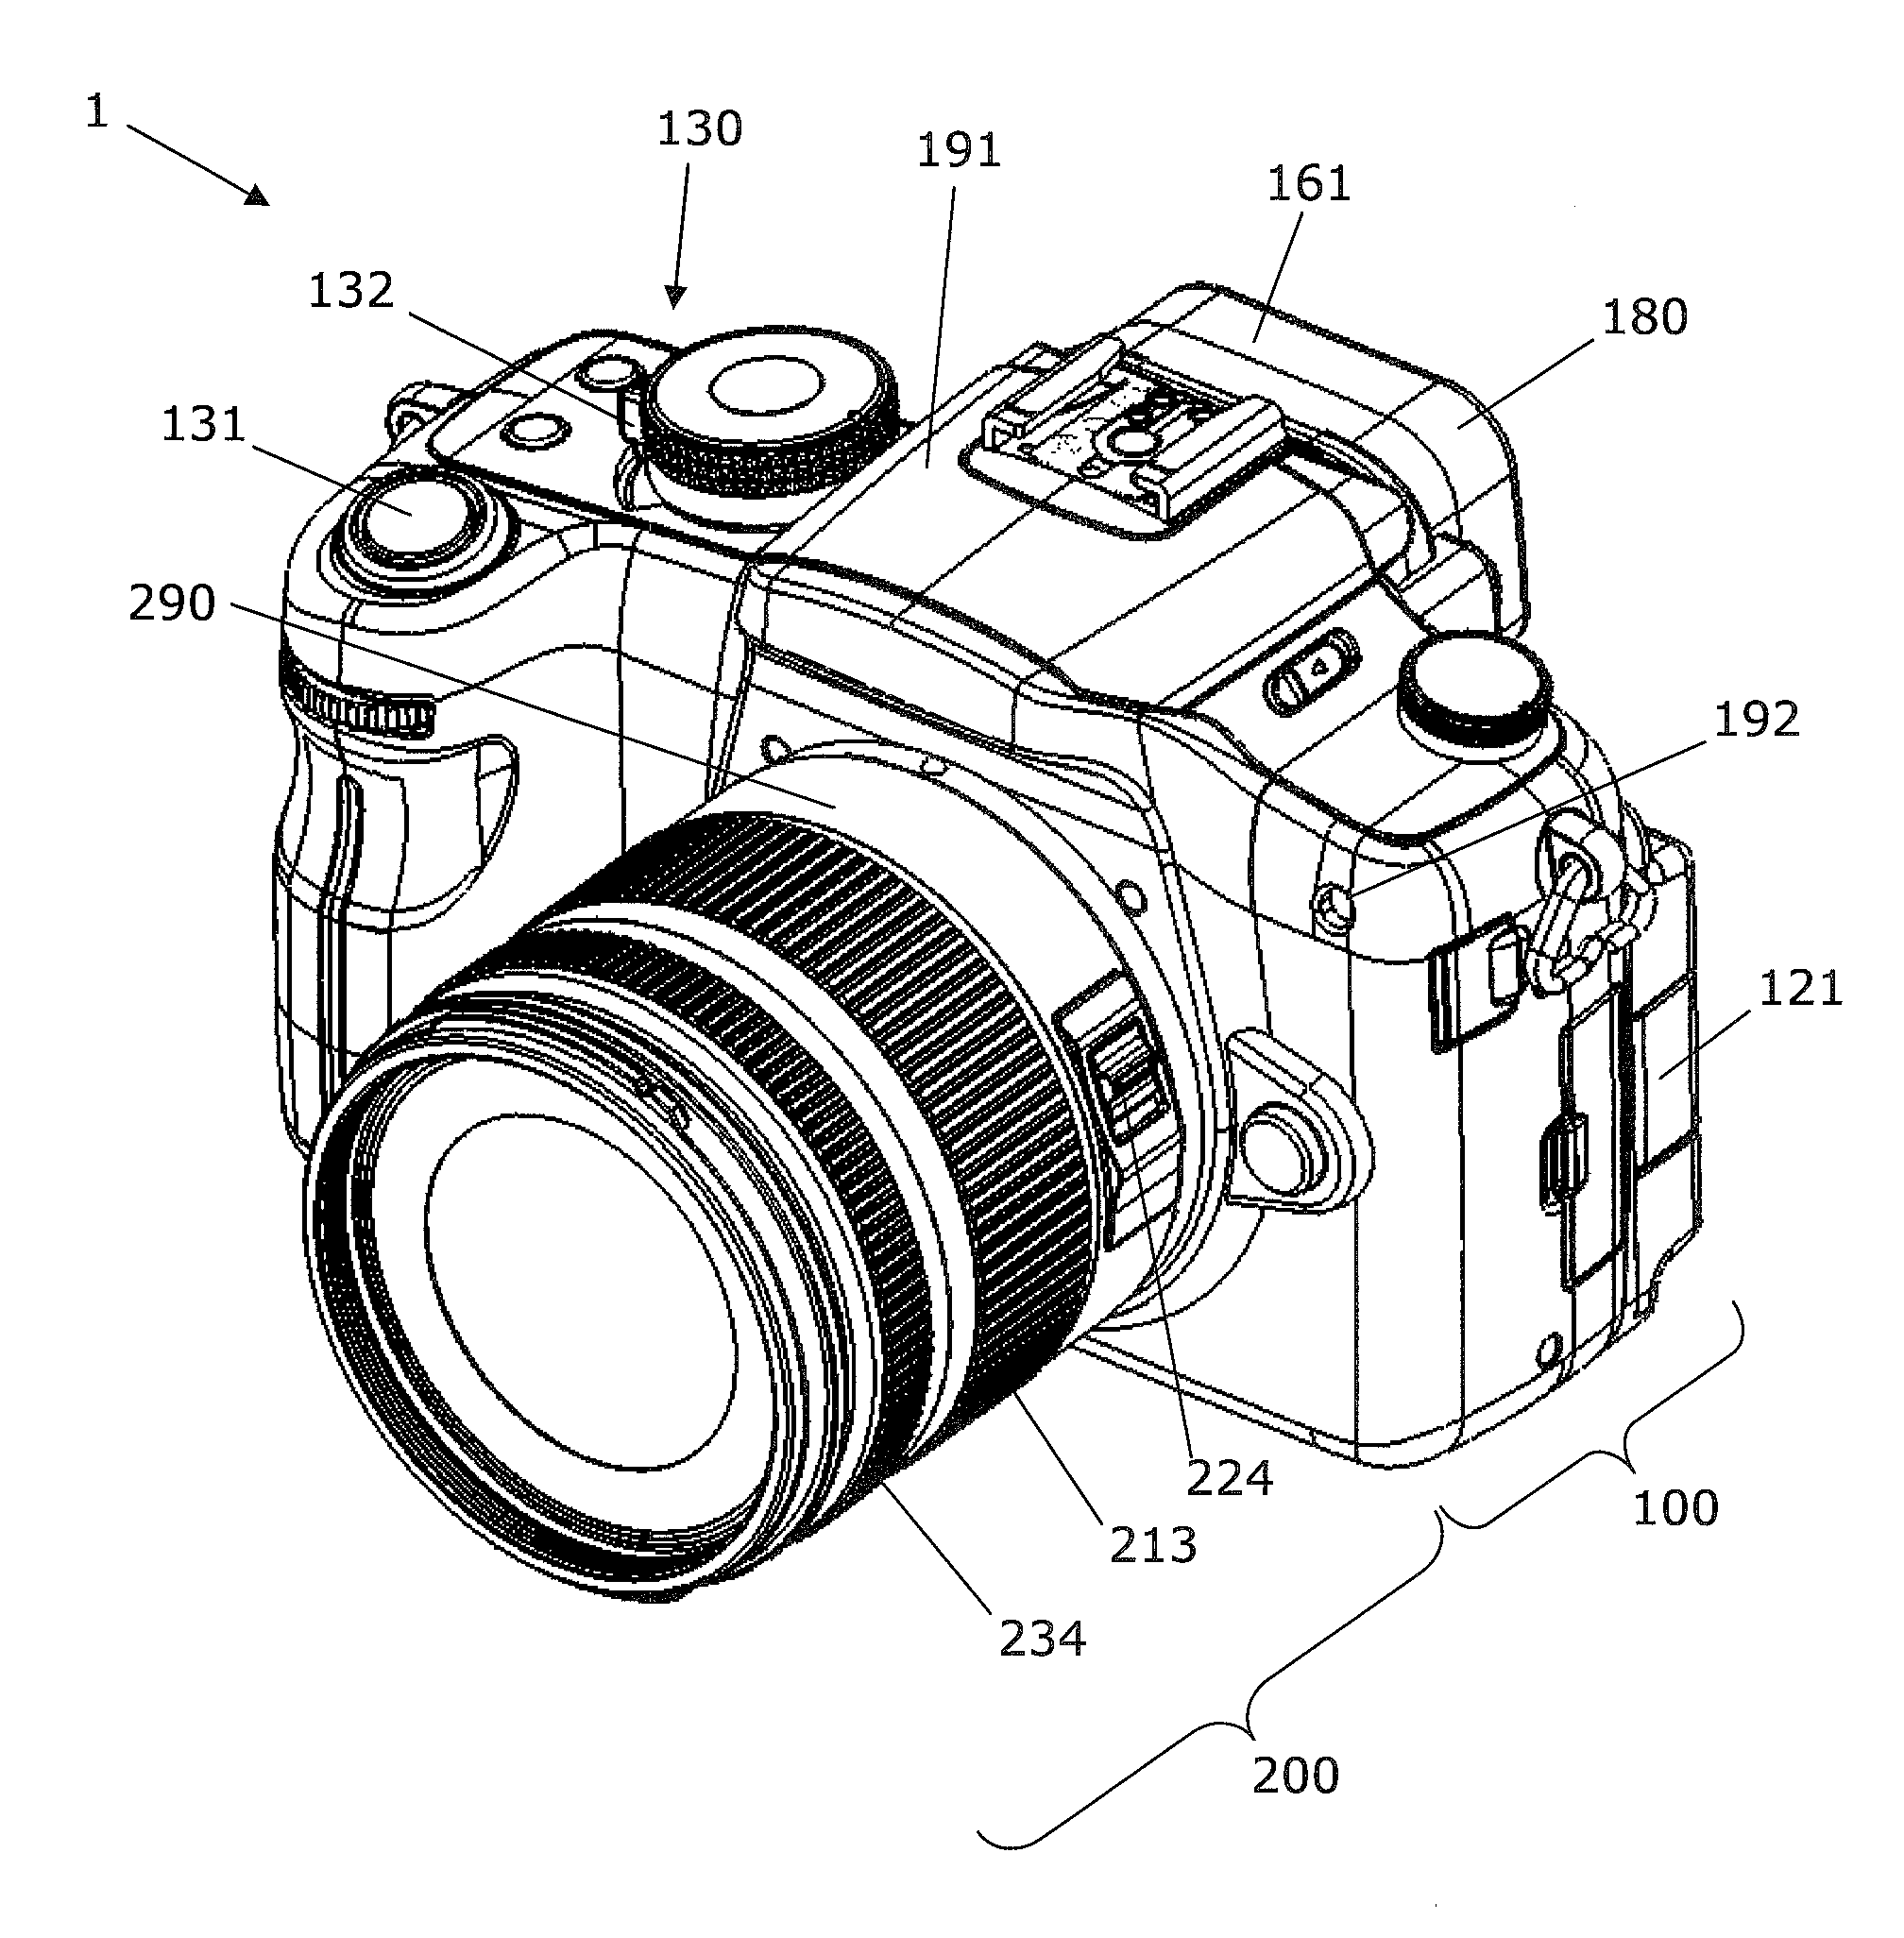 Camera body